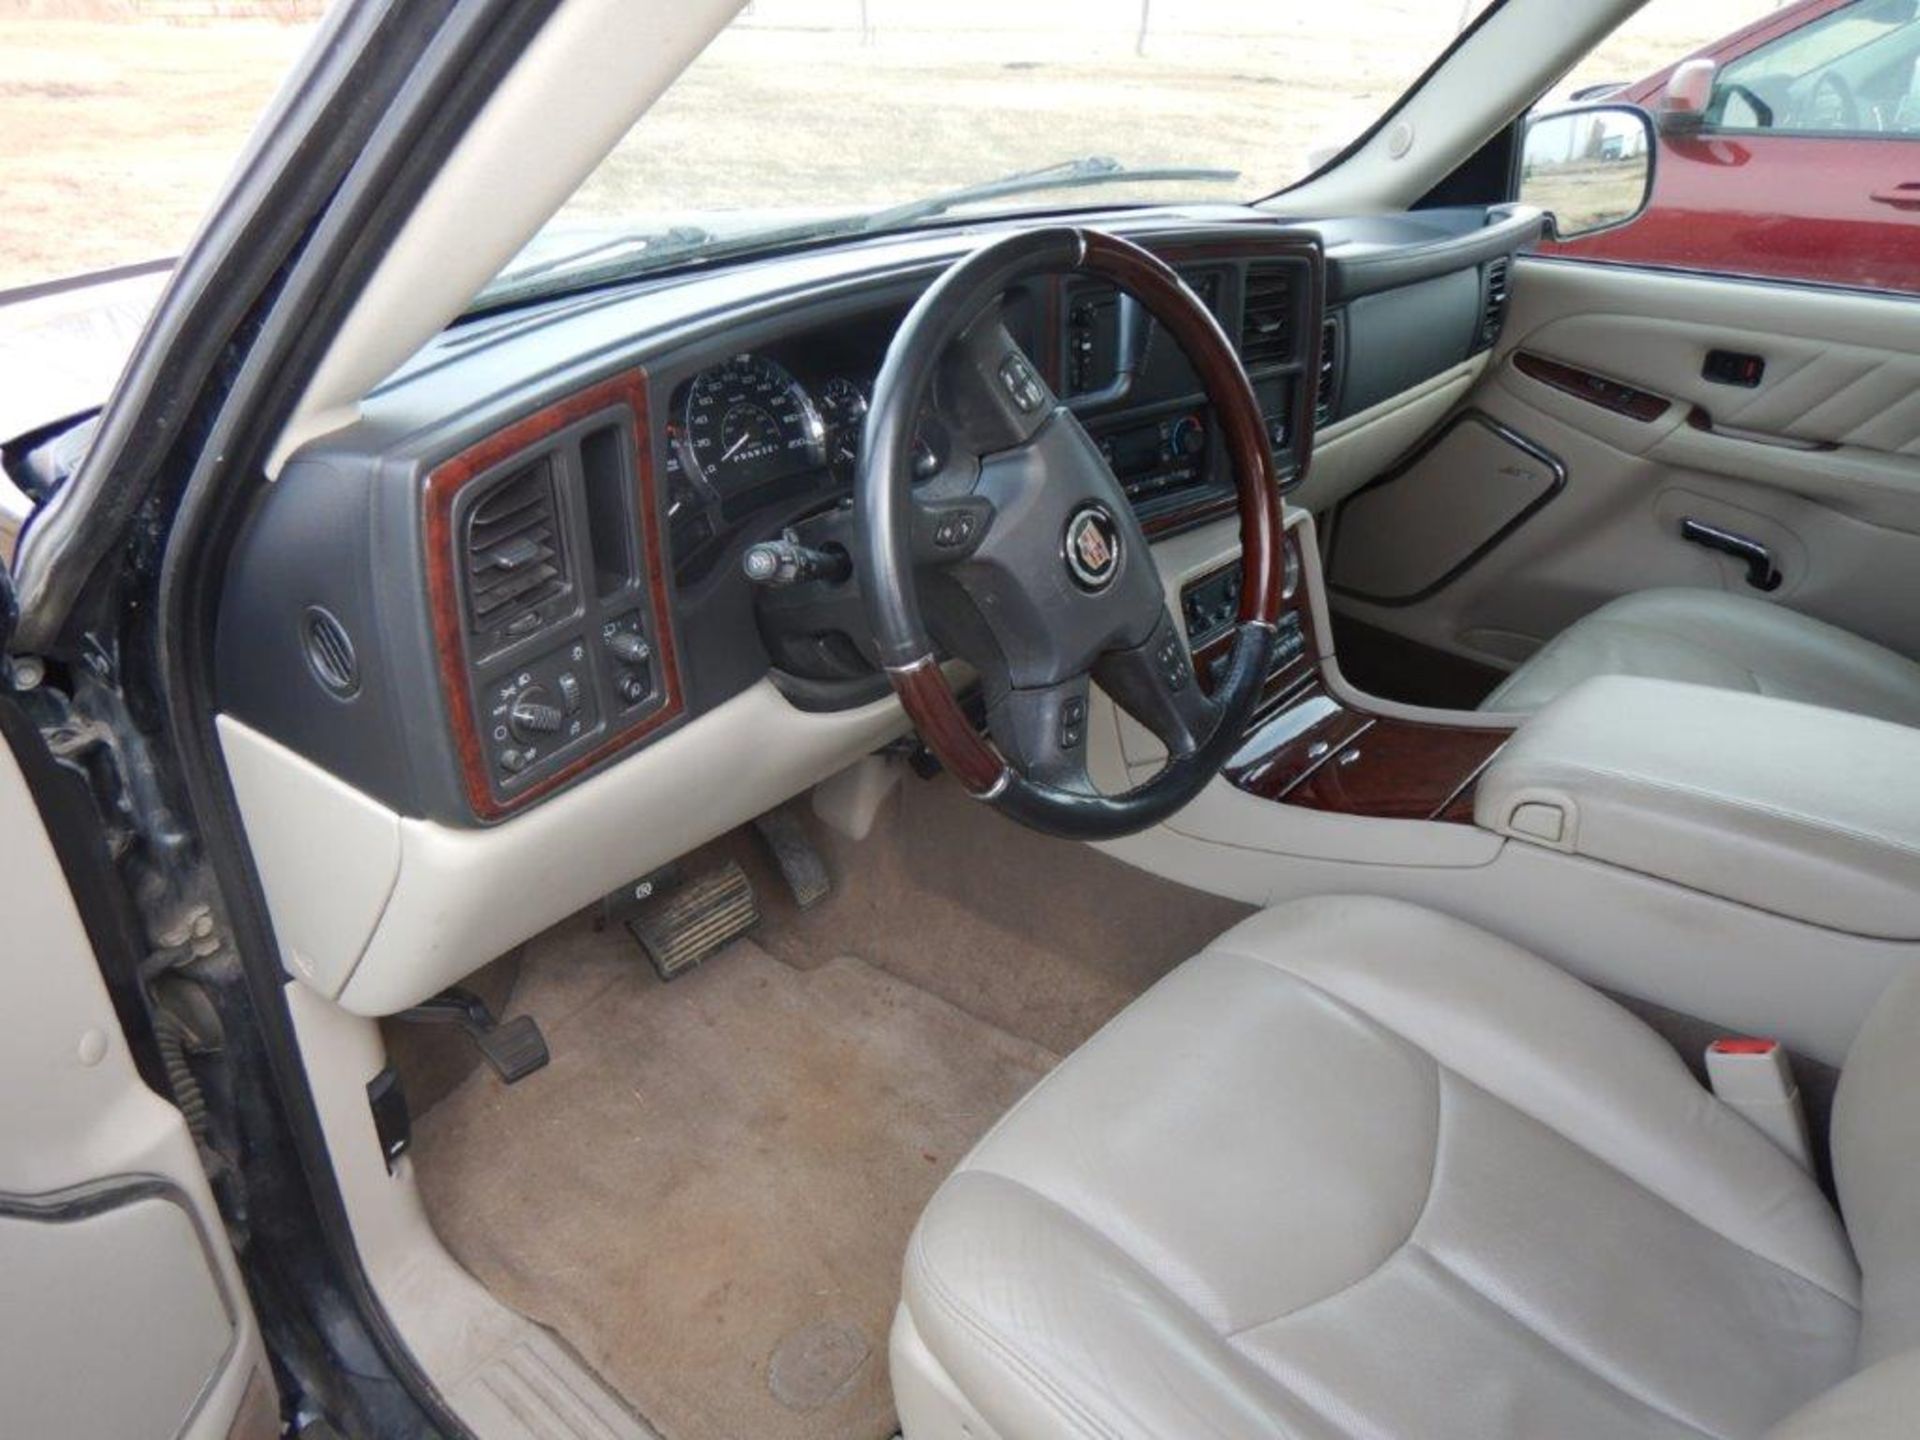 2006 CADILLAC ESCALADE ESV PLATINUM XL V8 AWD SUV, 161,625 KM’S, 3RD ROW SEATING, LEATHER, - Image 8 of 12